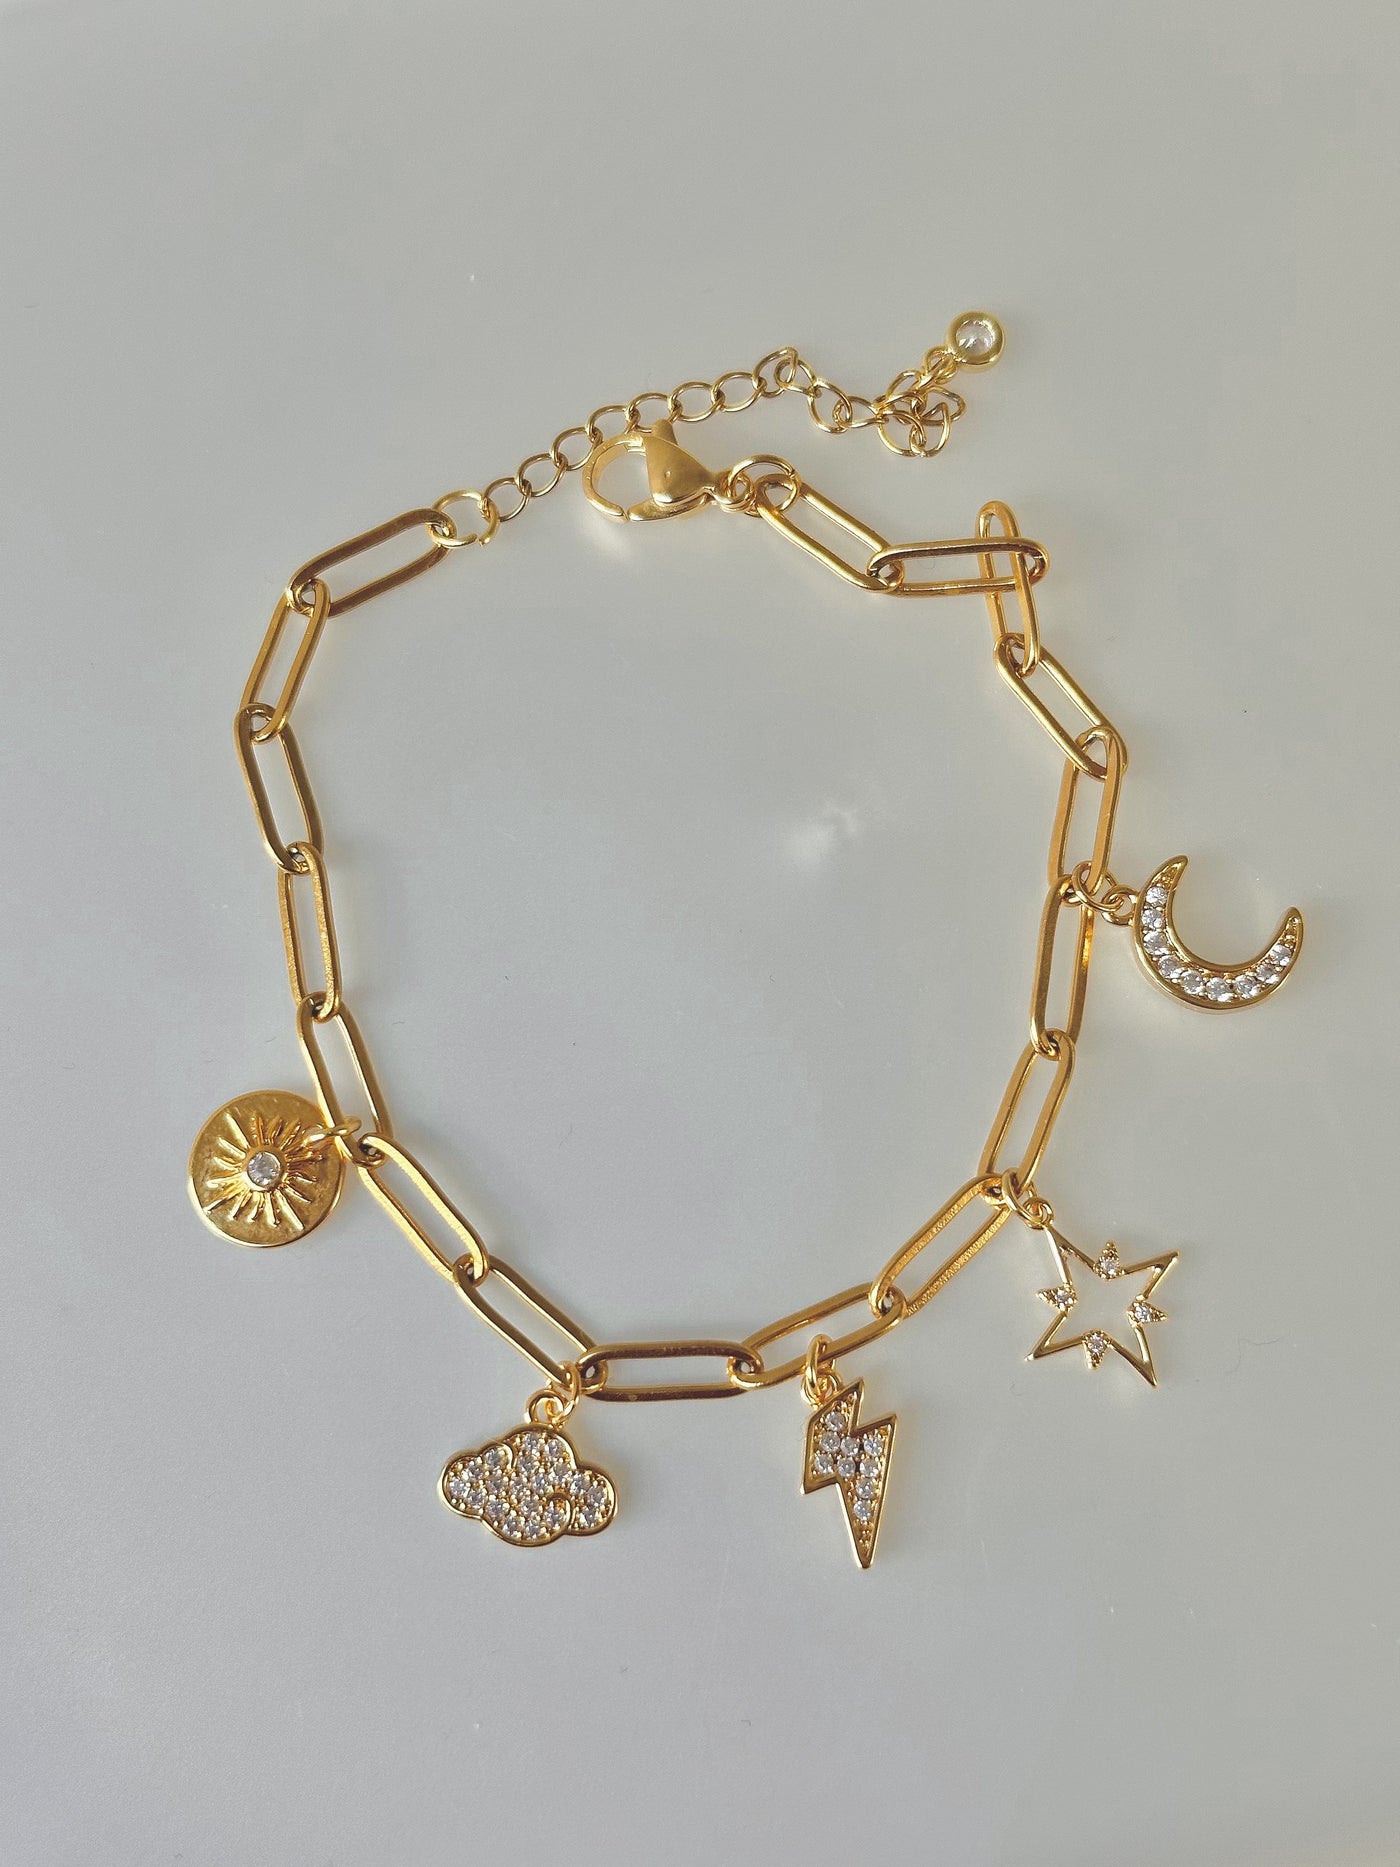 DIY celestial charm bracelet kit